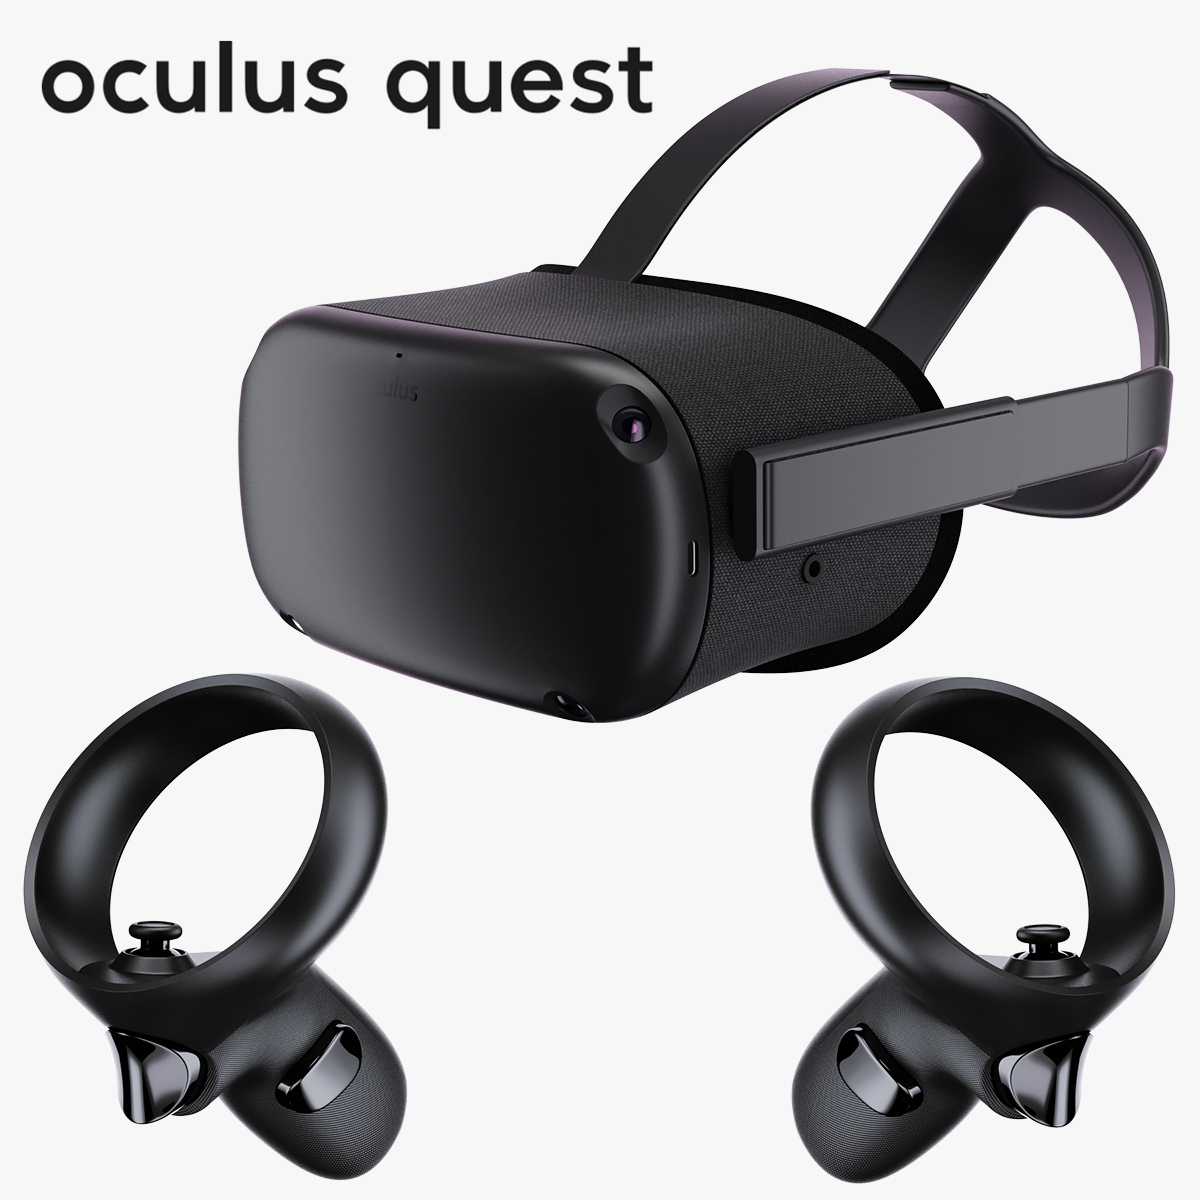 Oculus_Quest_00b.jpg899BA6E3-6E31-48B3-9458-AA5FD6068ED5Zoom.jpg